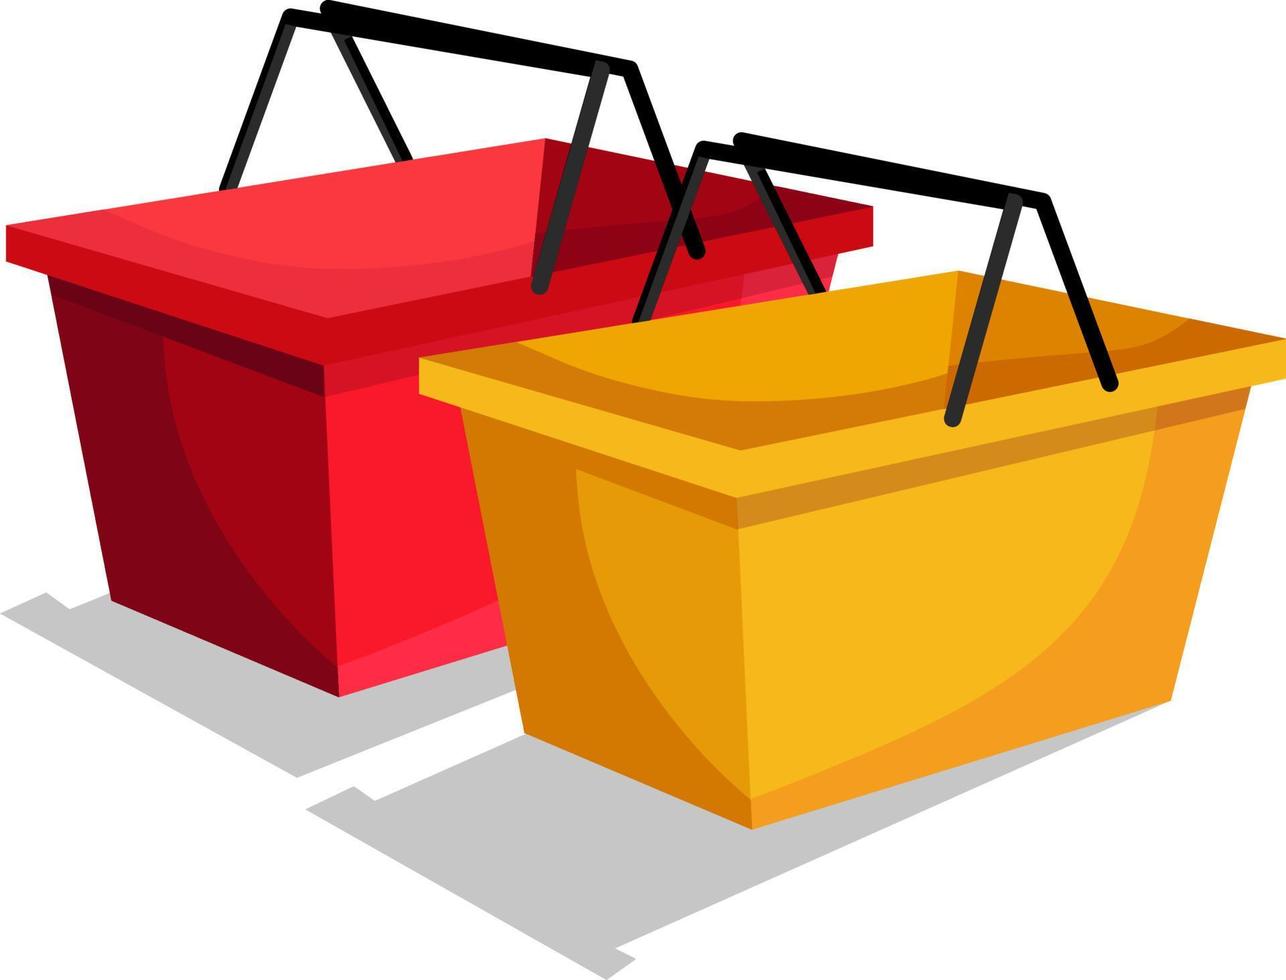 Shopping baskets, illustration, vector on white background